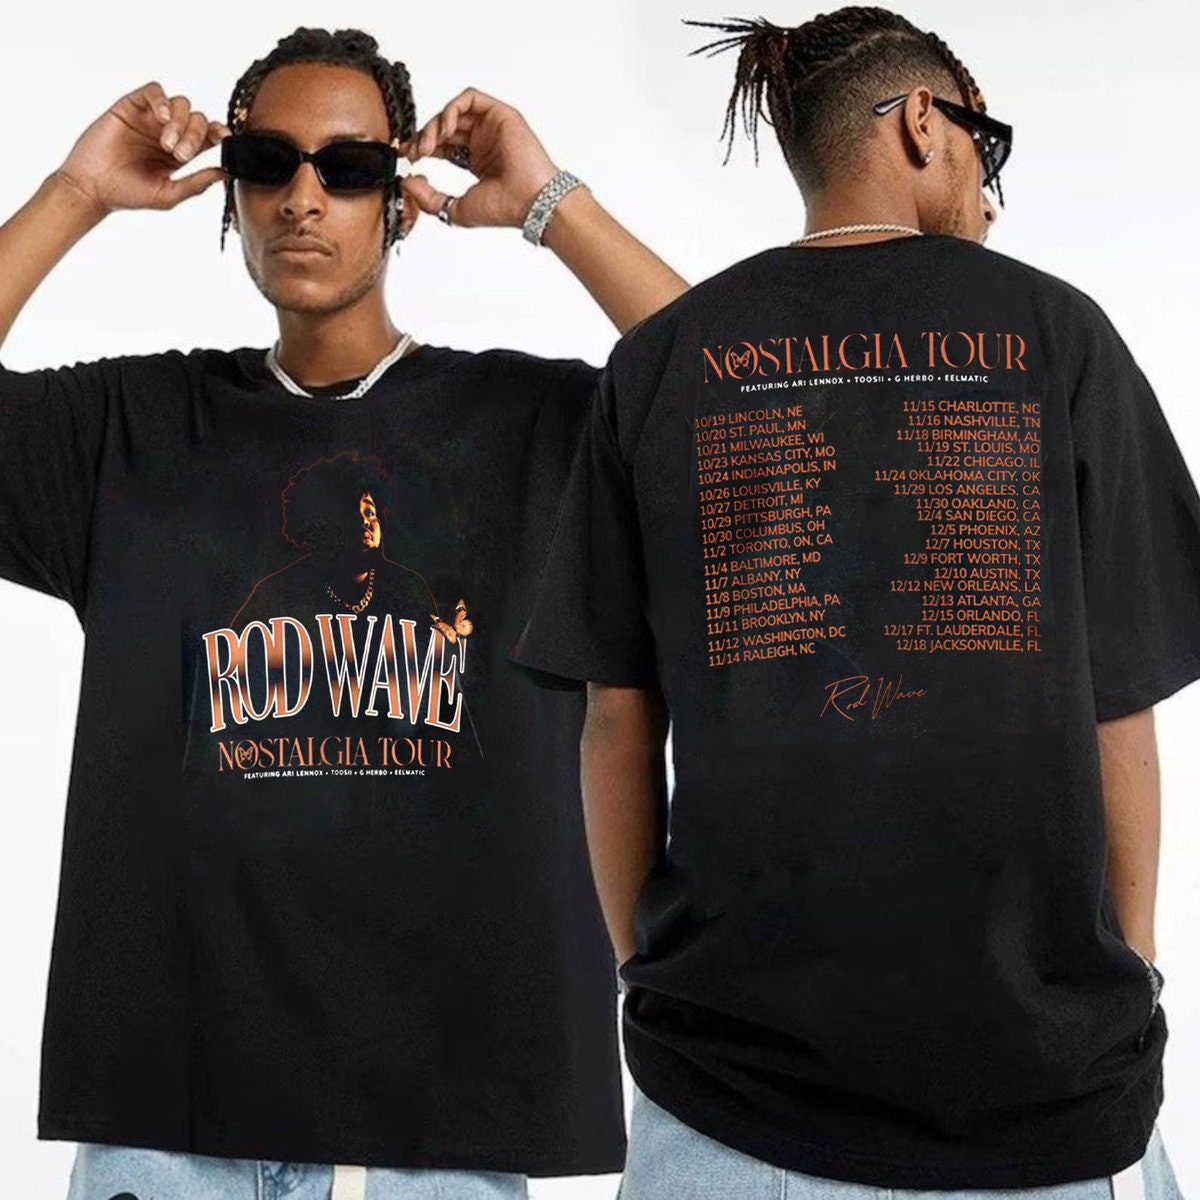 Discover Retro Rod Wave Nostalgia Tour Dates Double Sided T-Shirt